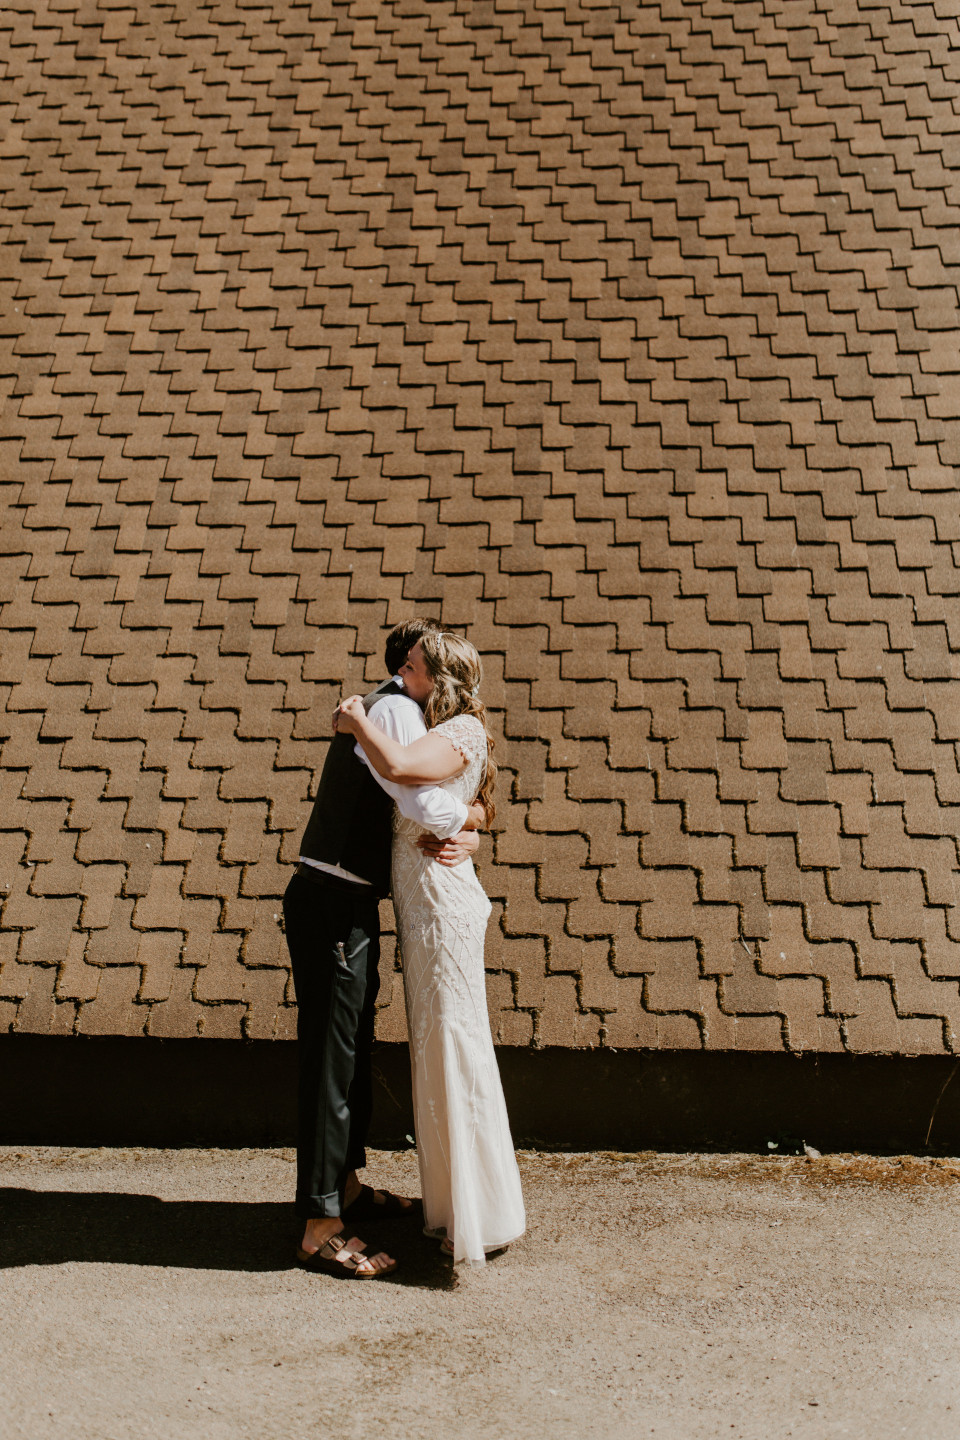 Dan and Hannah hug in Corvallis, Oregon. Intimate wedding photography in Corvallis Oregon by Sienna Plus Josh.